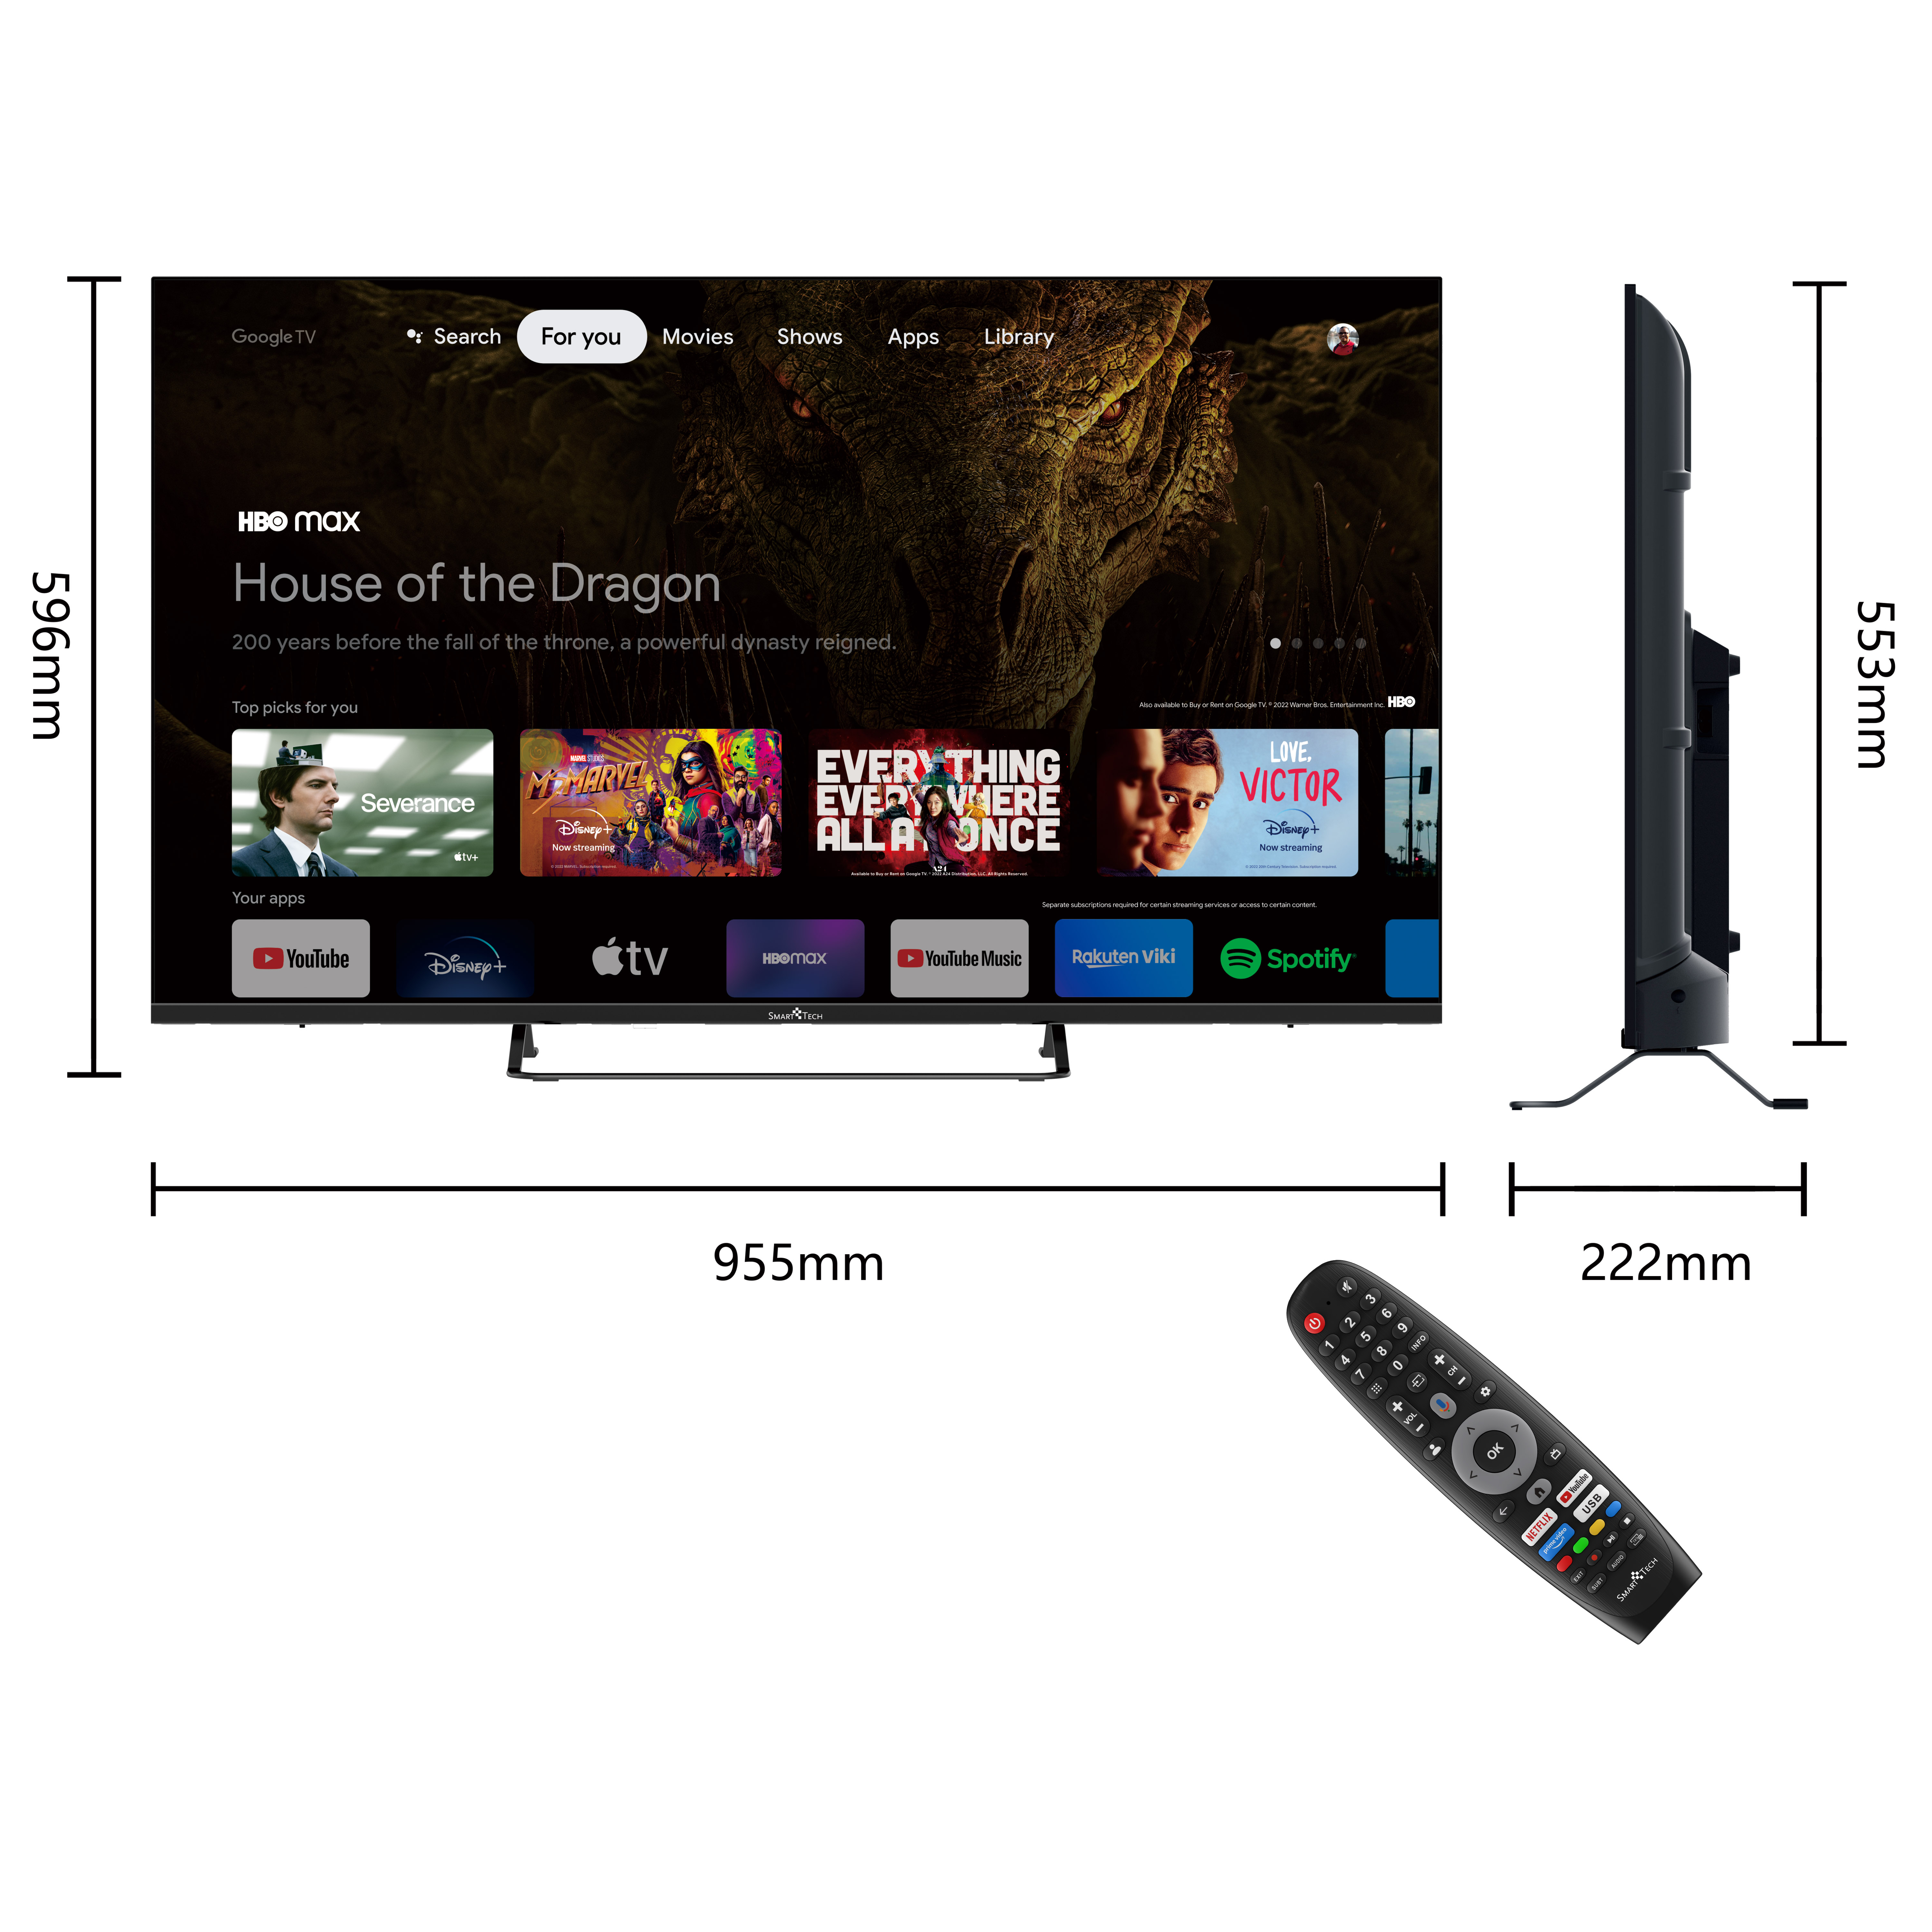 SMART TECH 43 Zoll 43UG10V3 Zoll TV, SMART TV) cm, Google 4K, (Flat, TV 43 / 108 UHD TV